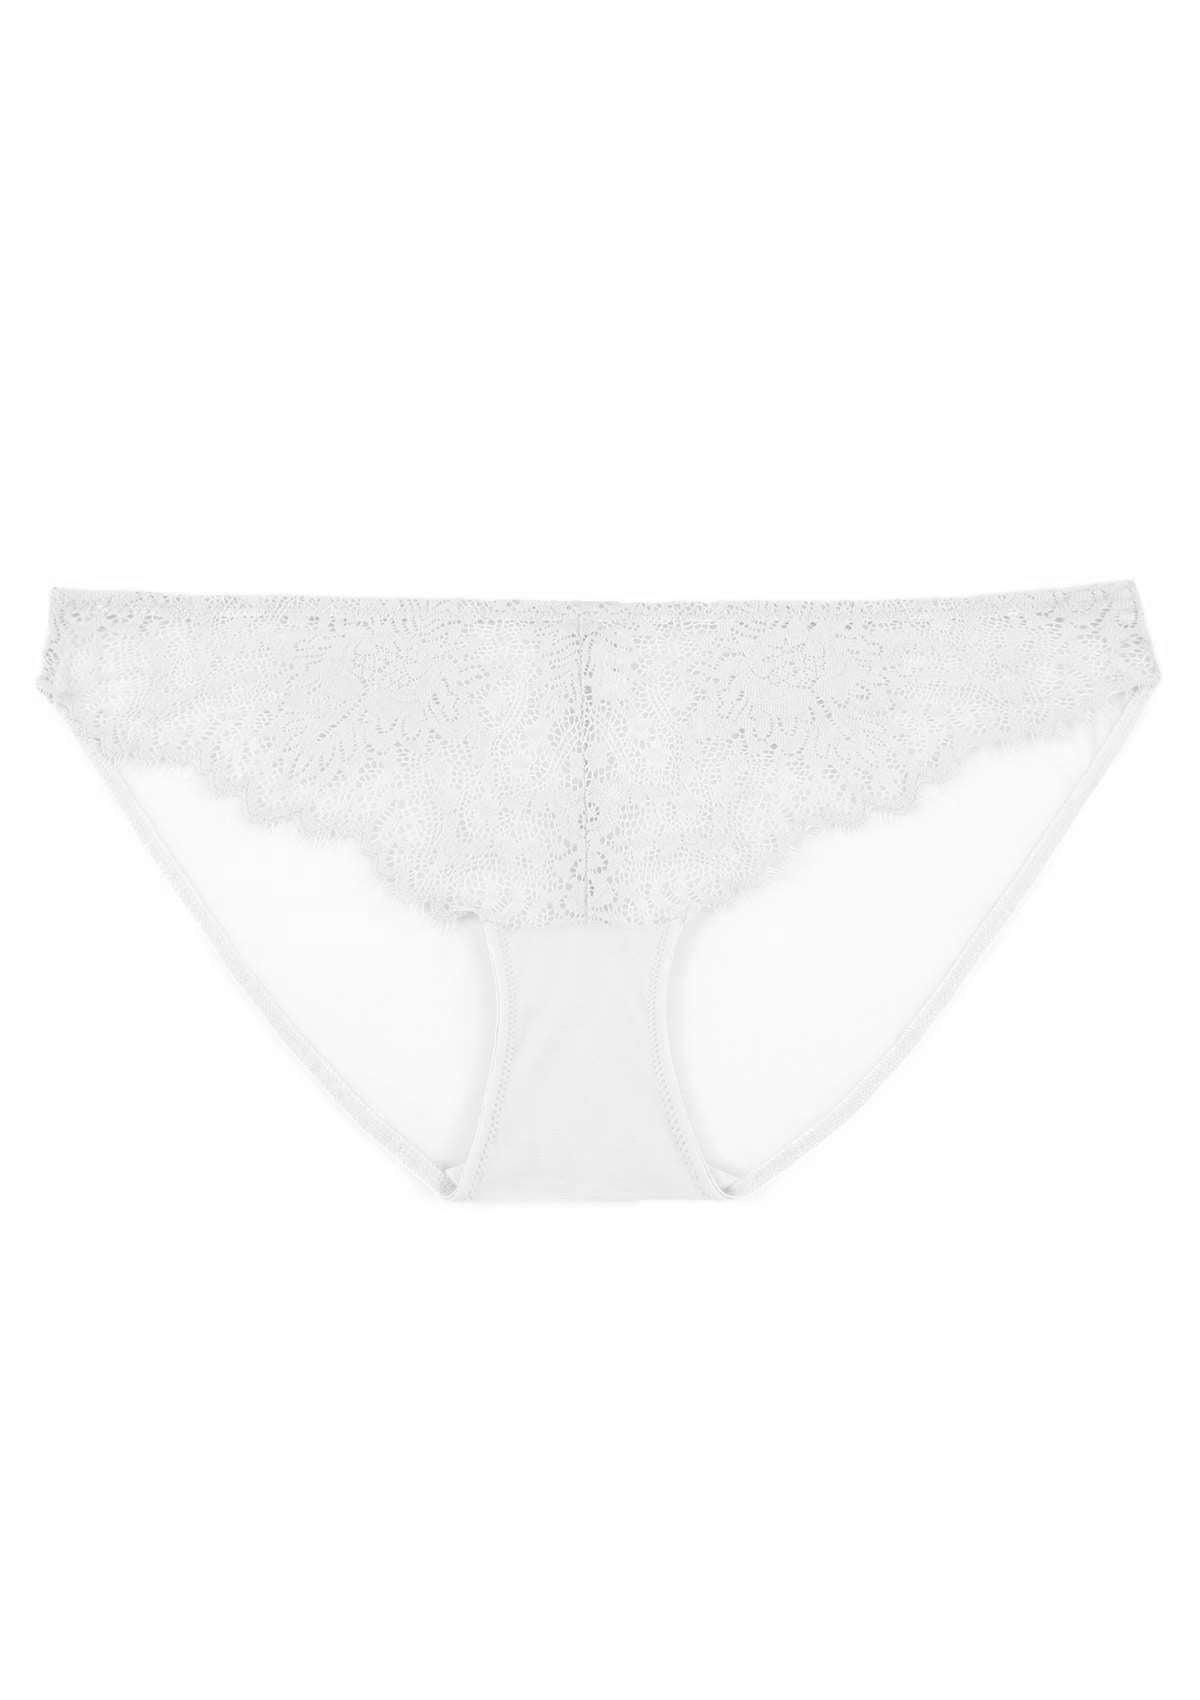 HSIA Sunflower Exquisite White Lace Bikini Underwear - XXL / High-Rise Brief / White